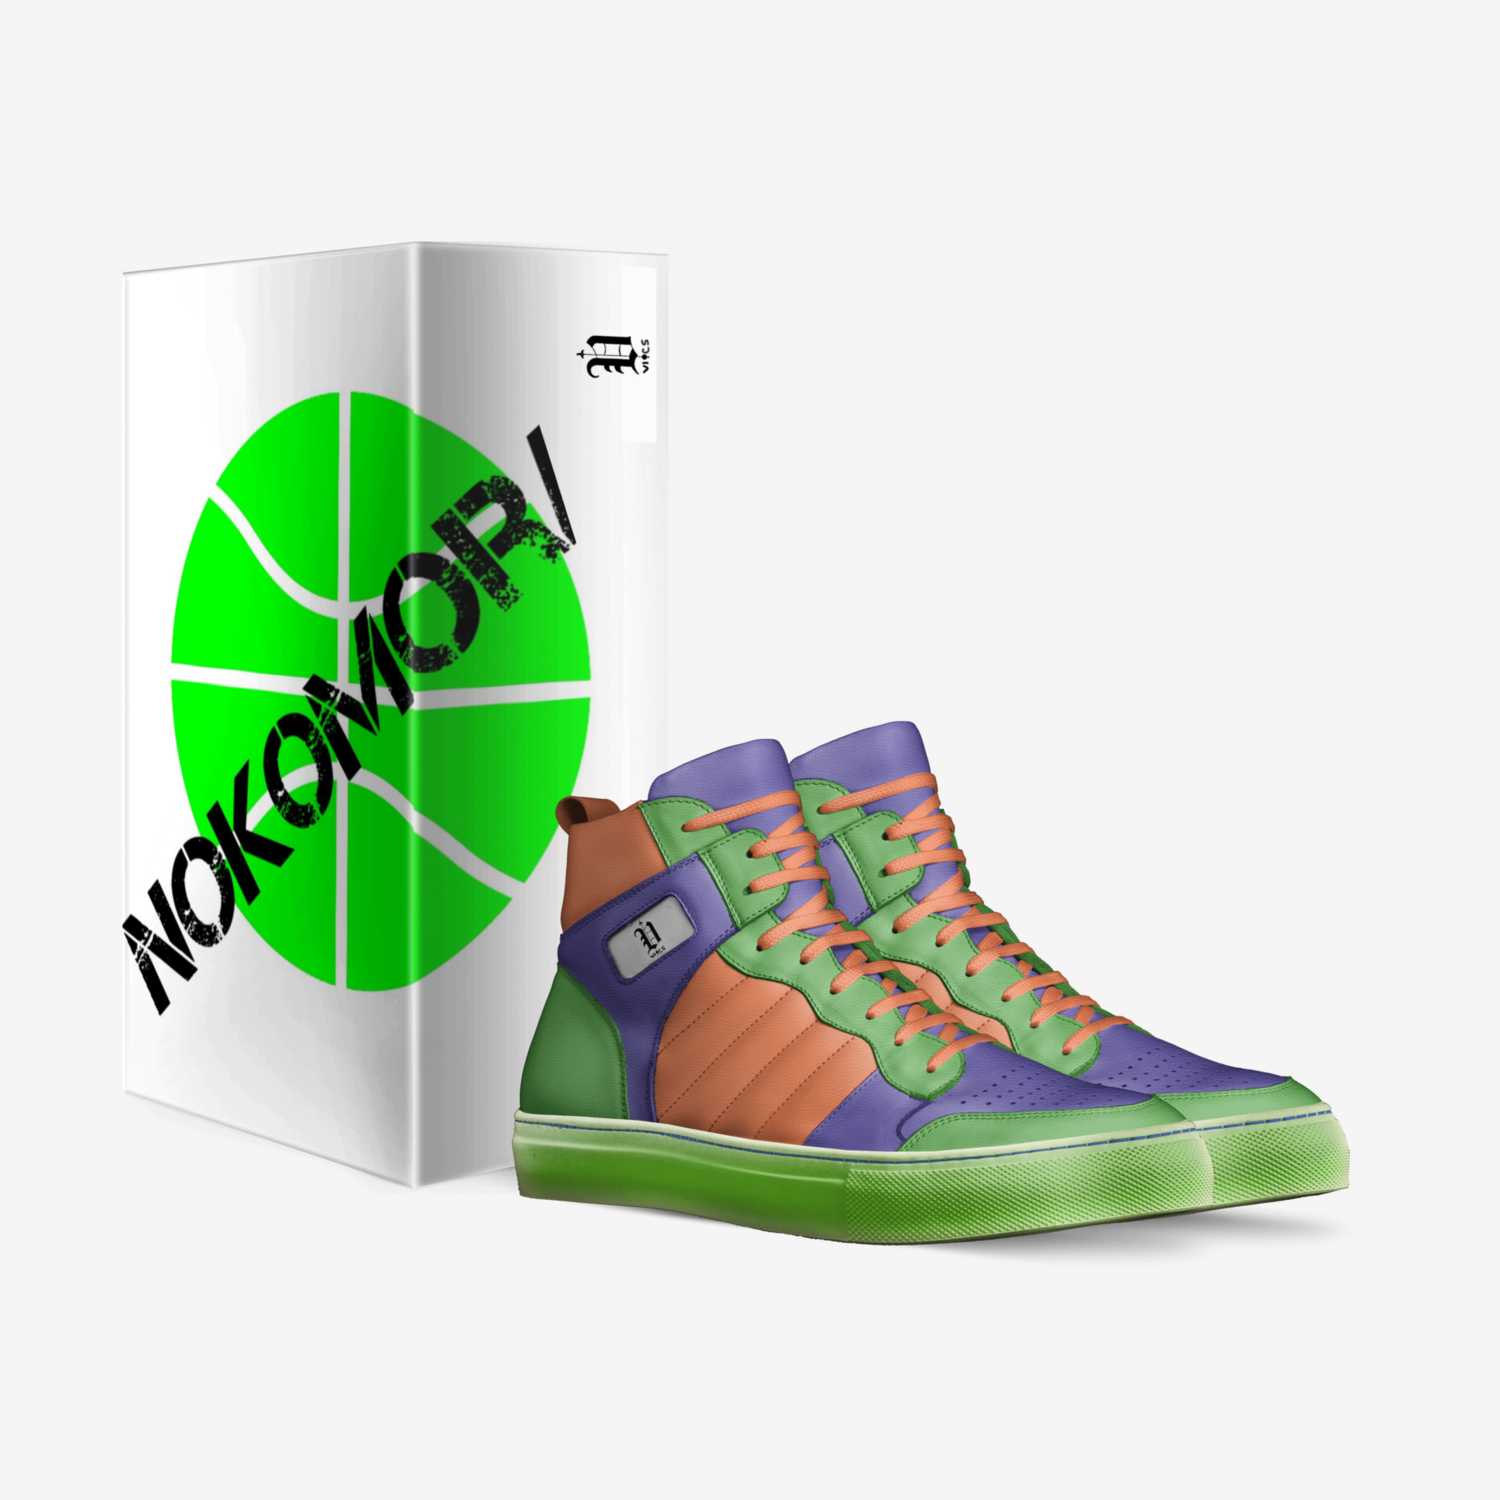 Vics nokomora custom made in Italy shoes by Brayden Murphy | Box view